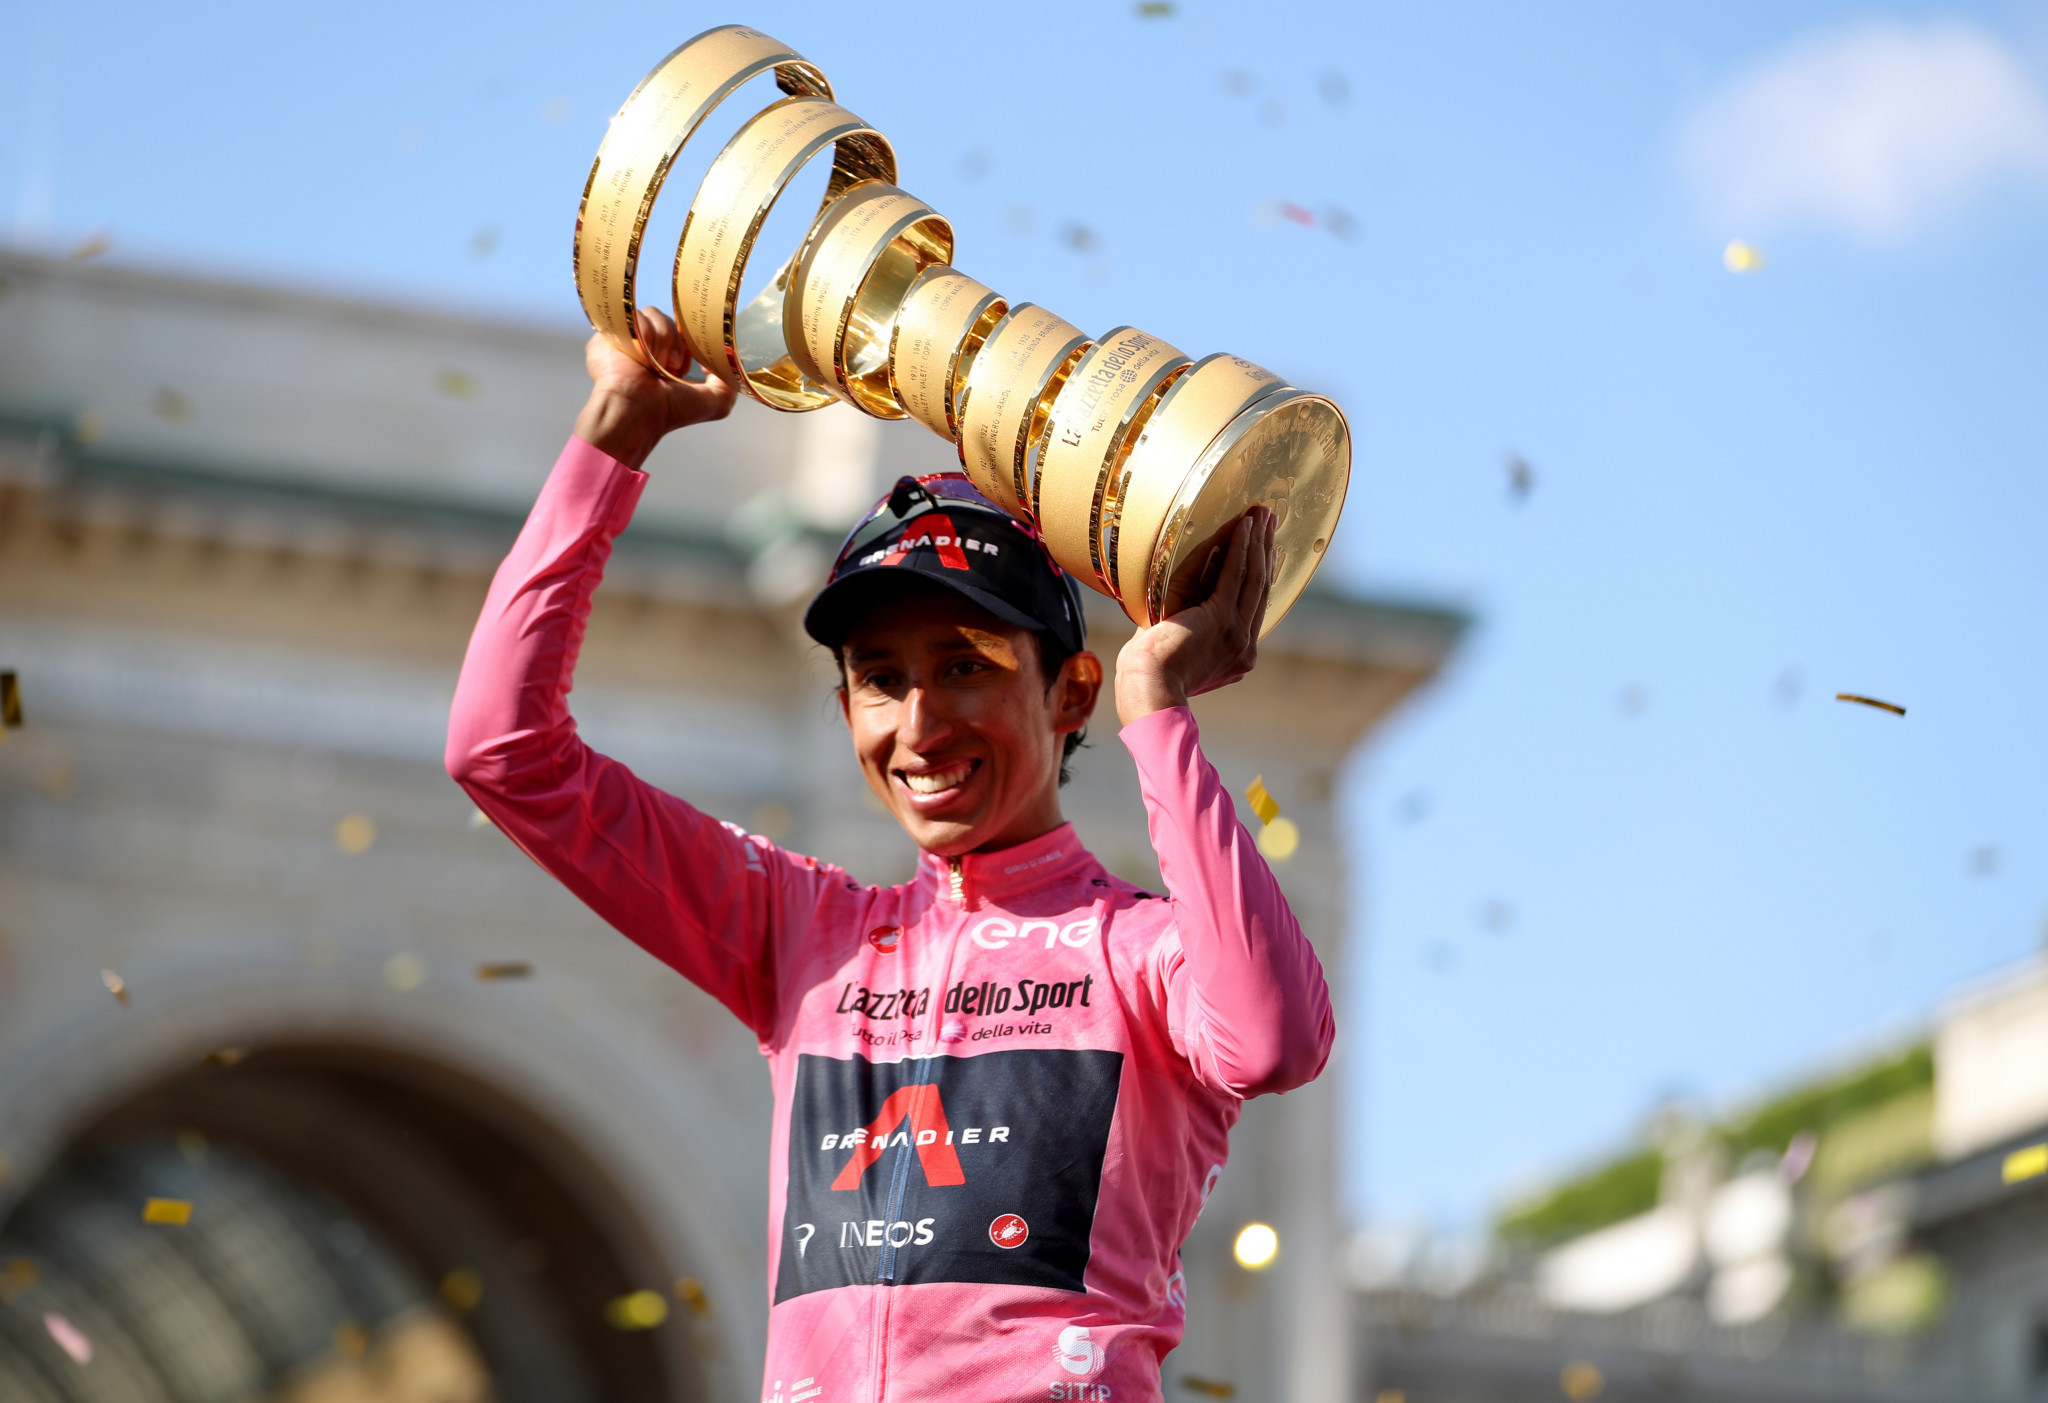 Giro d'Italia winner Egan Bernal will participate in tomorrow's criterium ©Getty Images